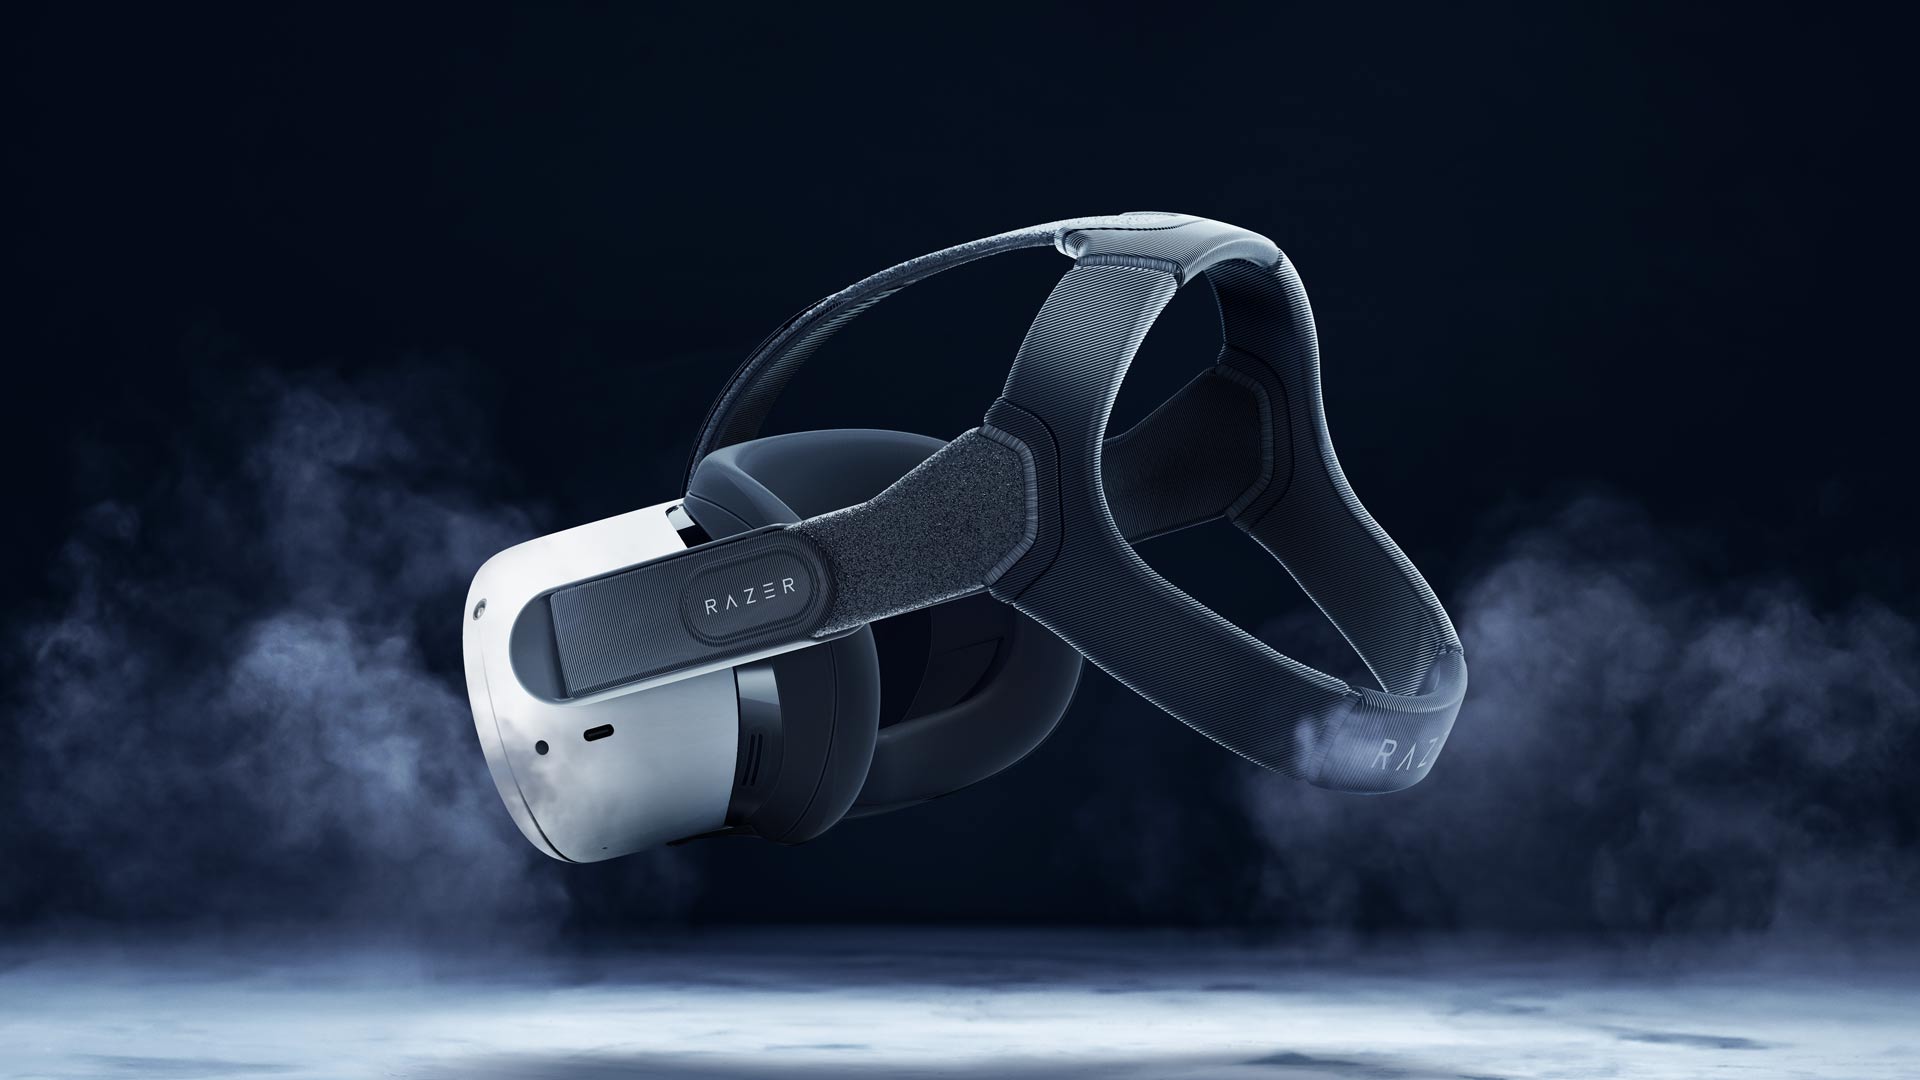 Adjustable Head Strap Bundle for Meta Quest 3 VR Headset VR Accessories